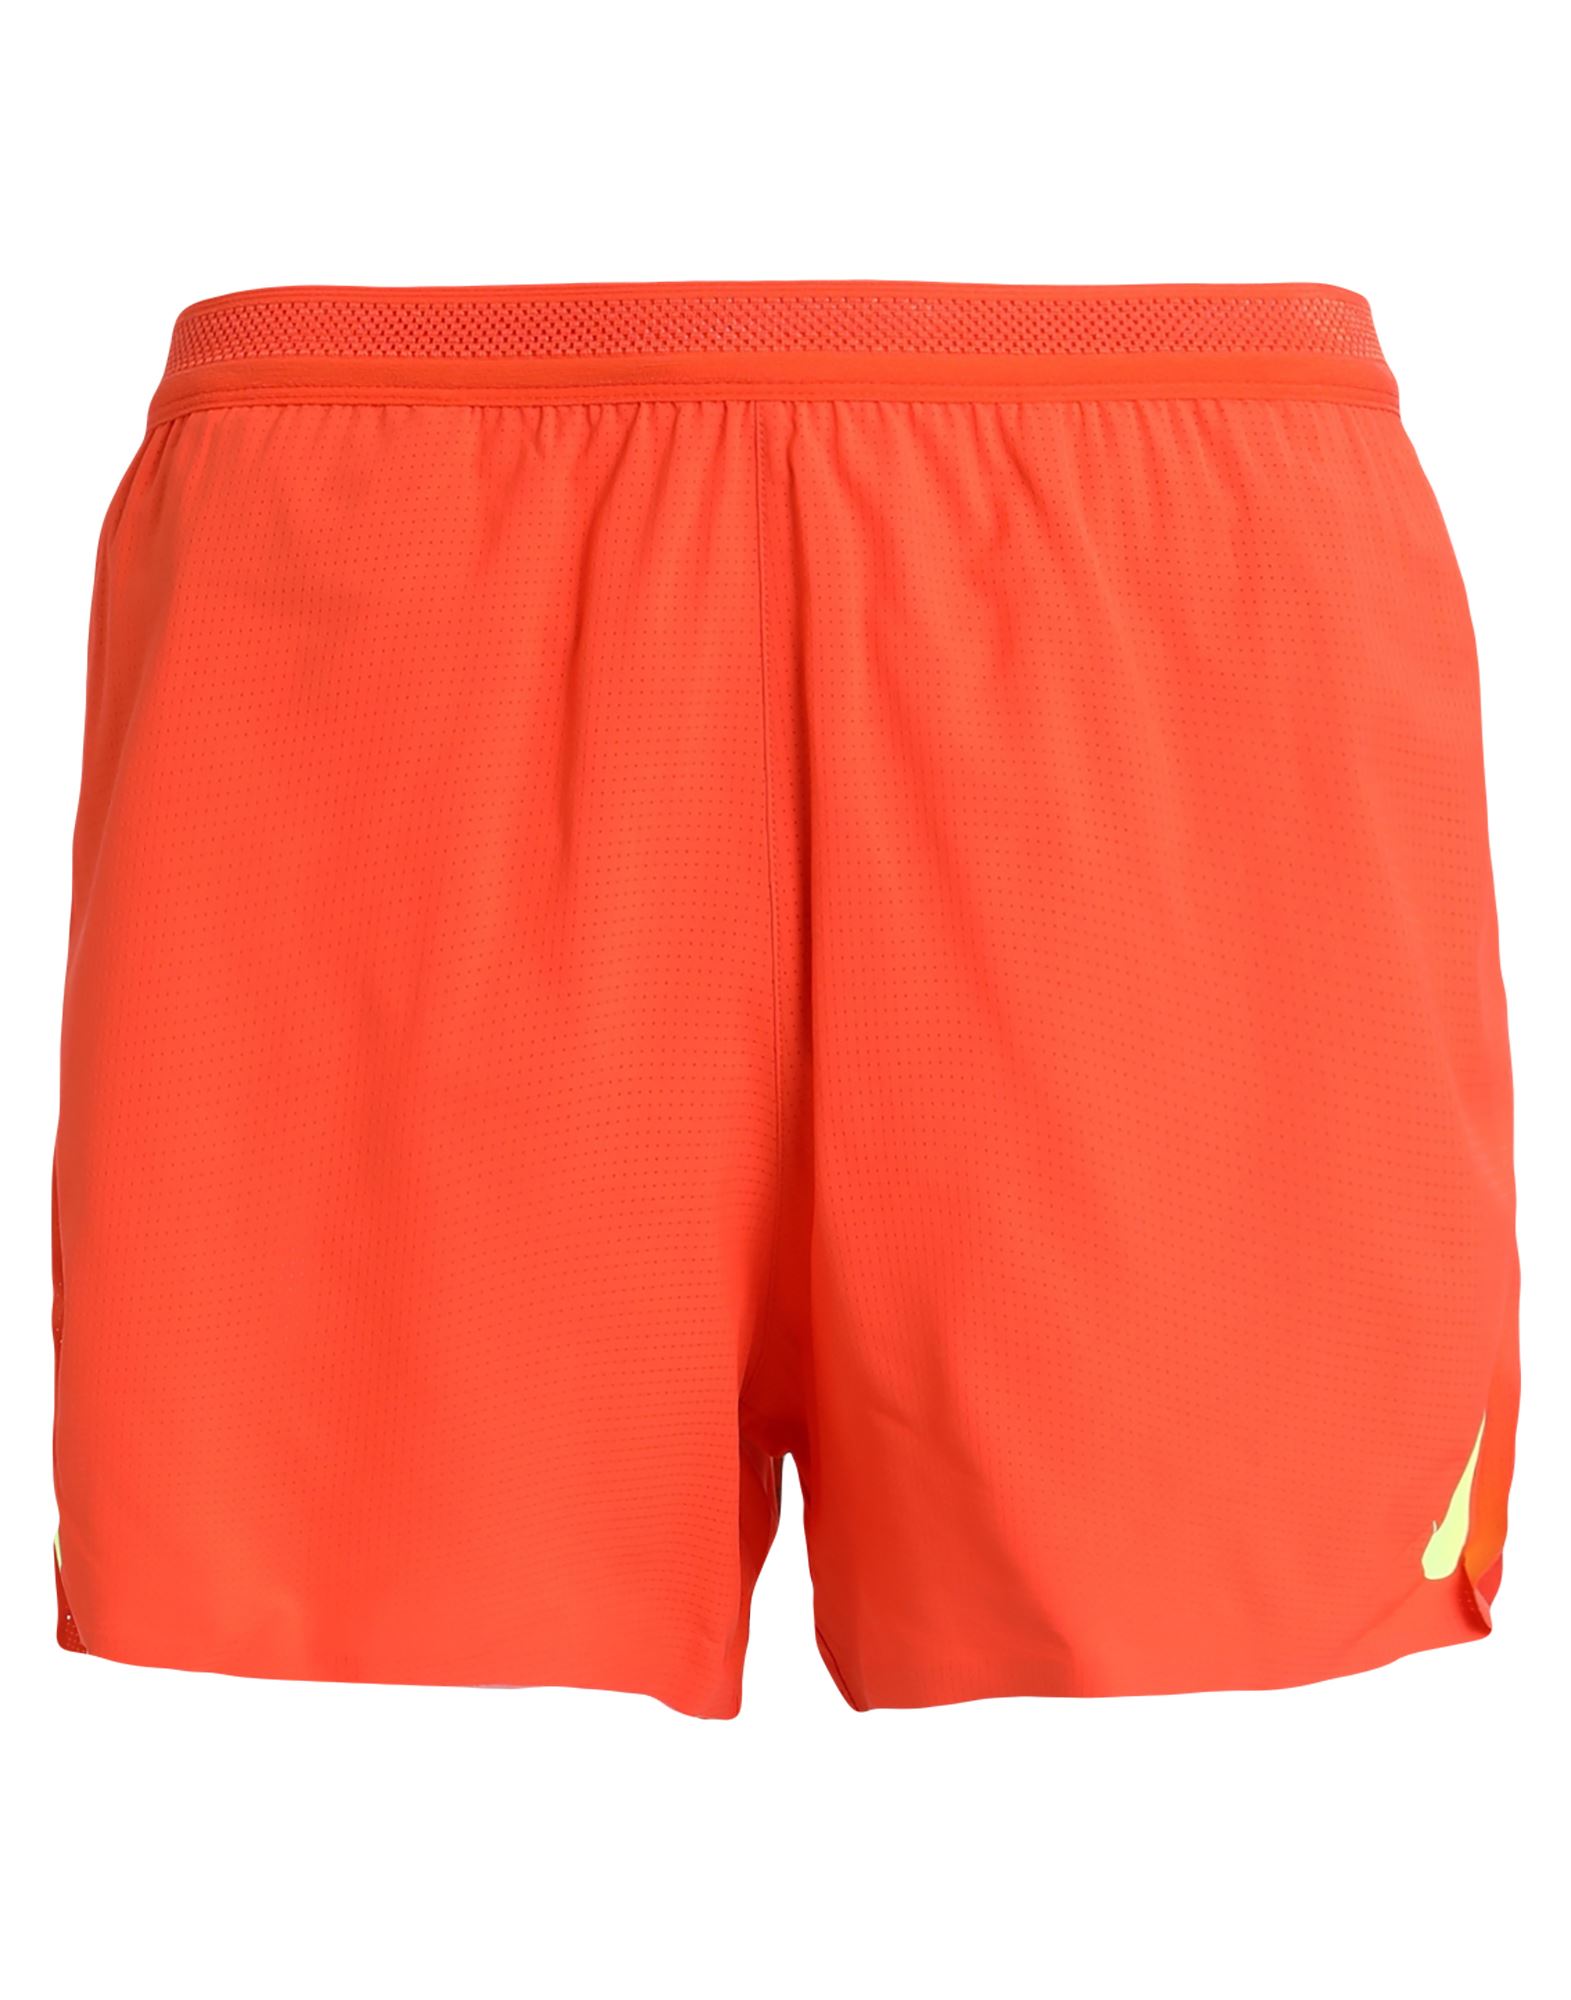 NIKE Shorts & Bermudashorts Herren Orange von NIKE